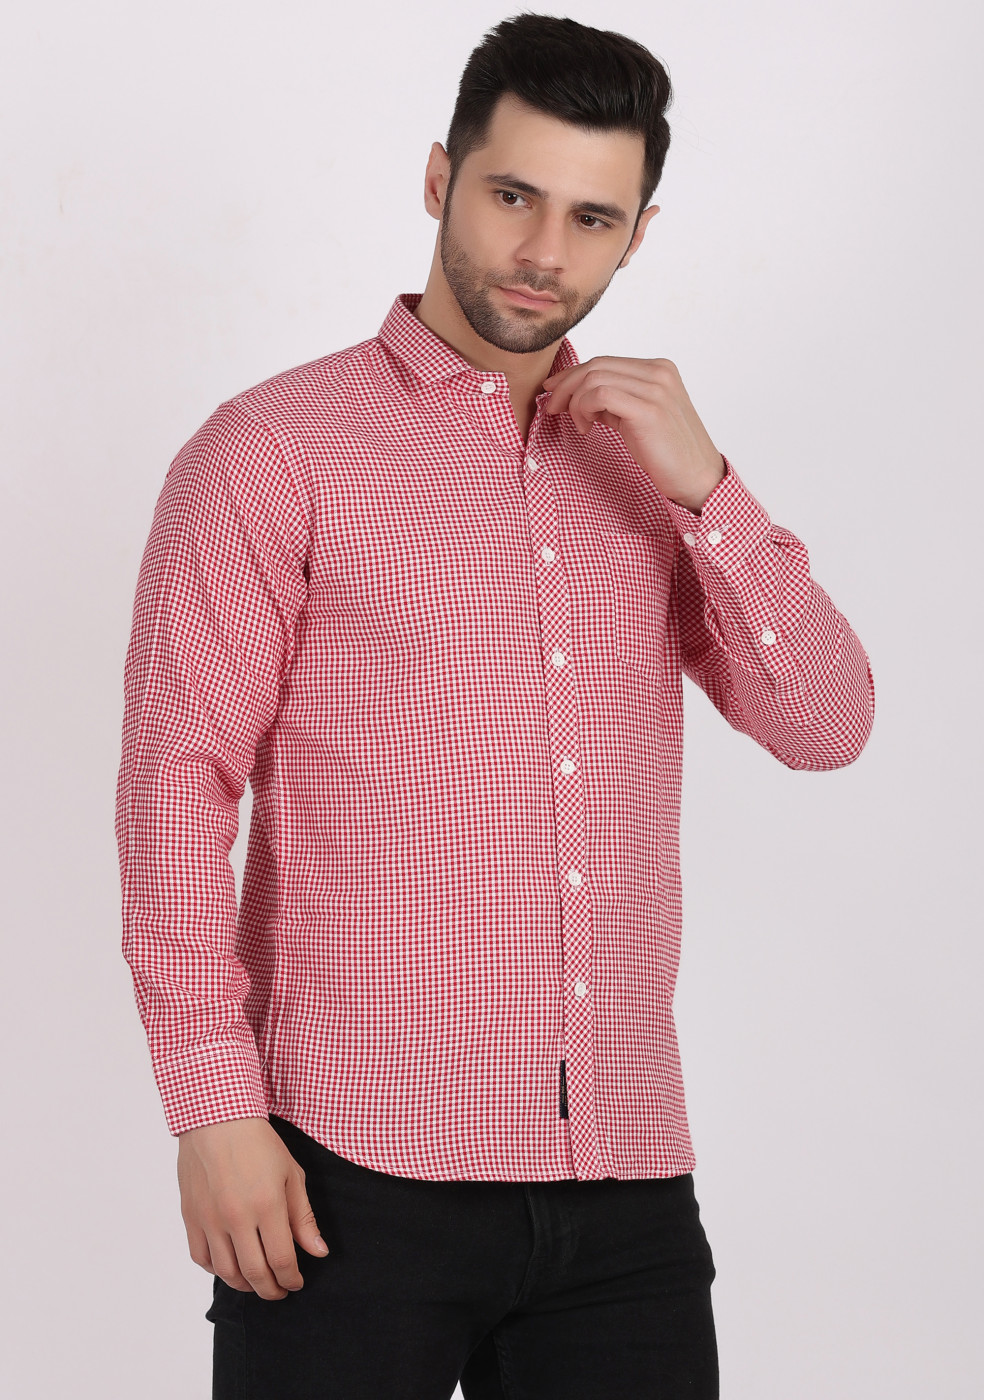 ASHTOM Red Color Small Check Shirt For Men